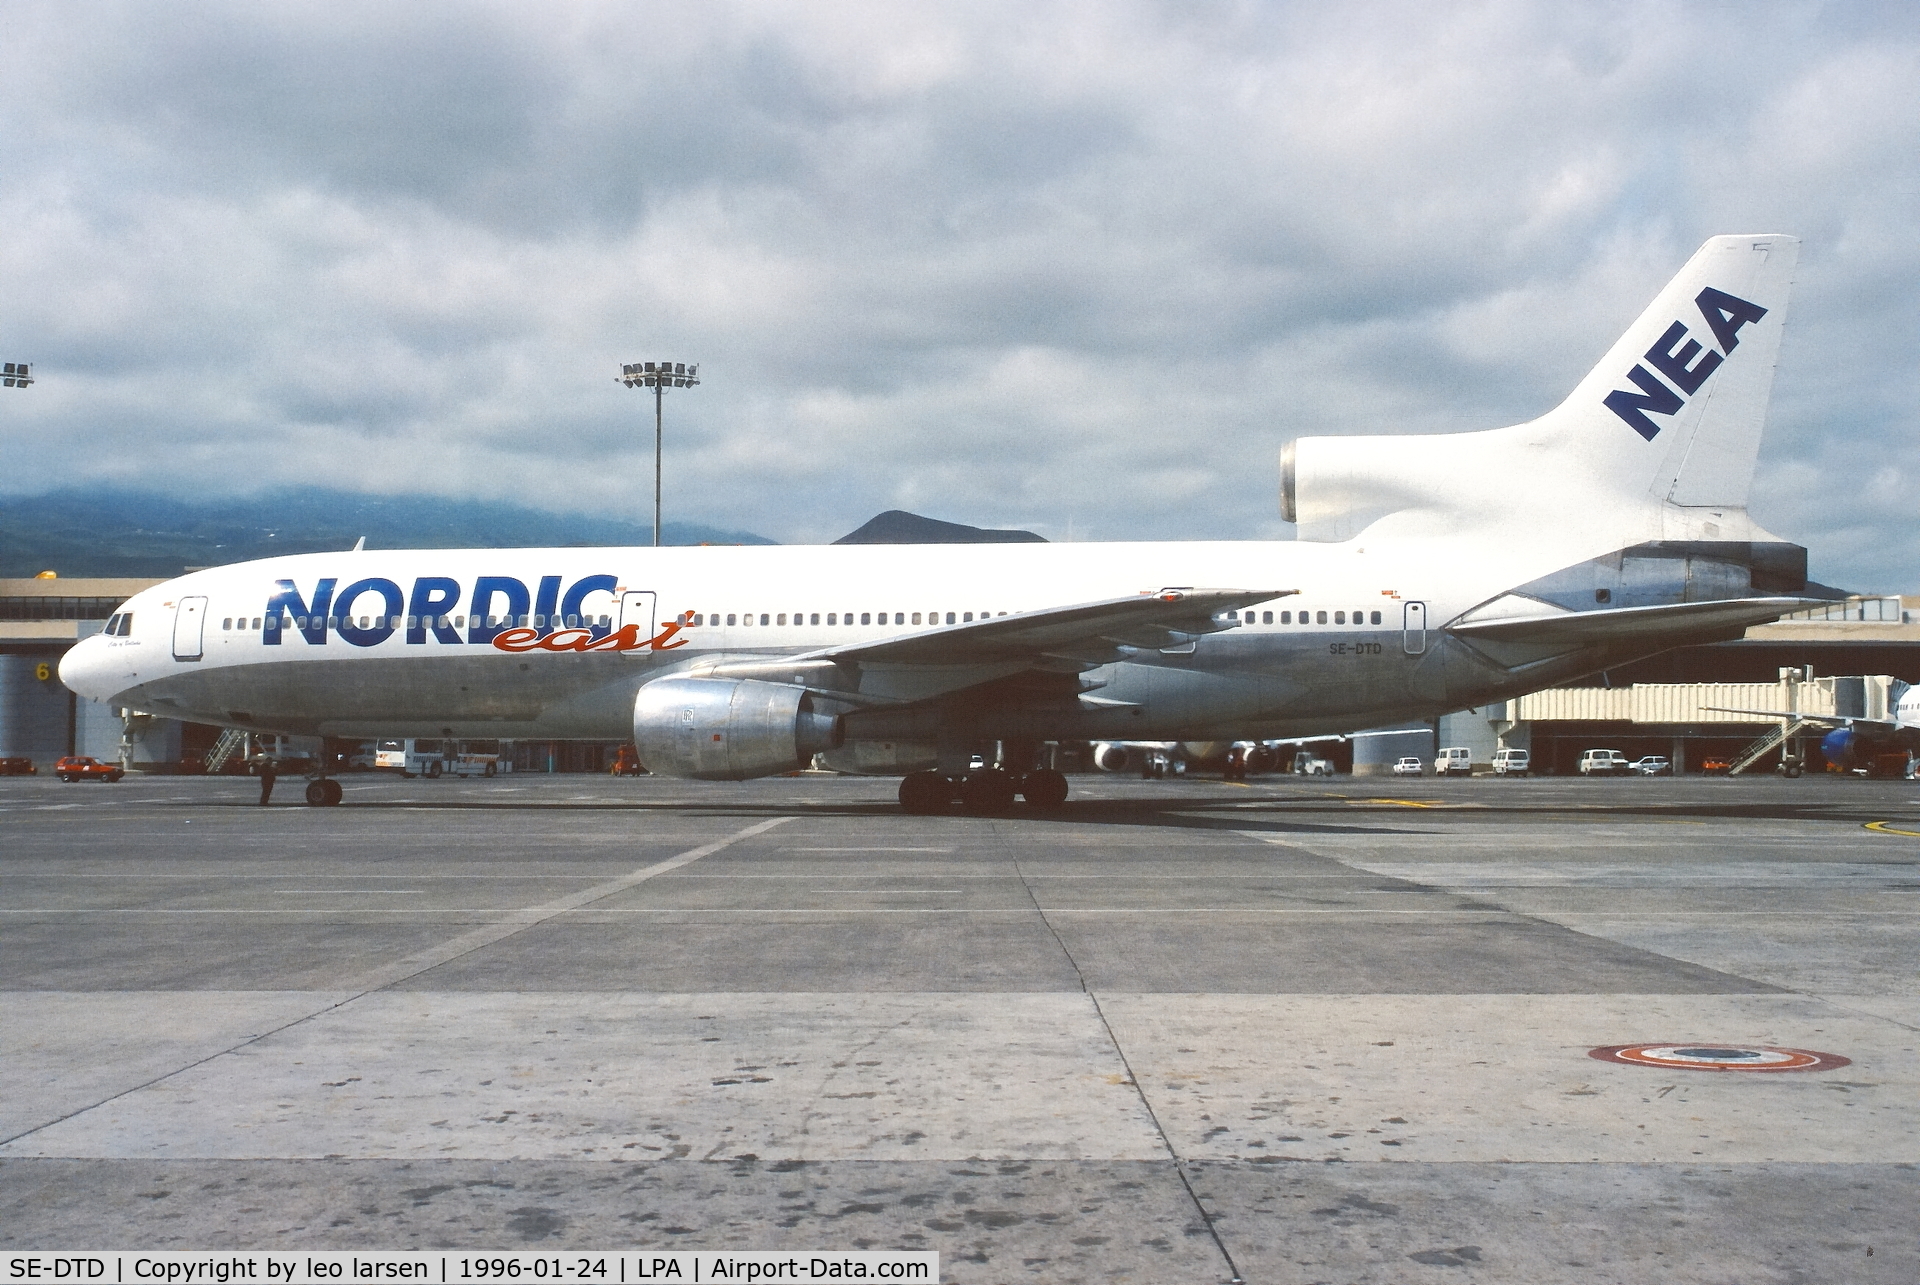 SE-DTD, 1973 Lockheed L-1011-385-1 TriStar 1 C/N 193R-1033, Las Palmas 24.1.1996